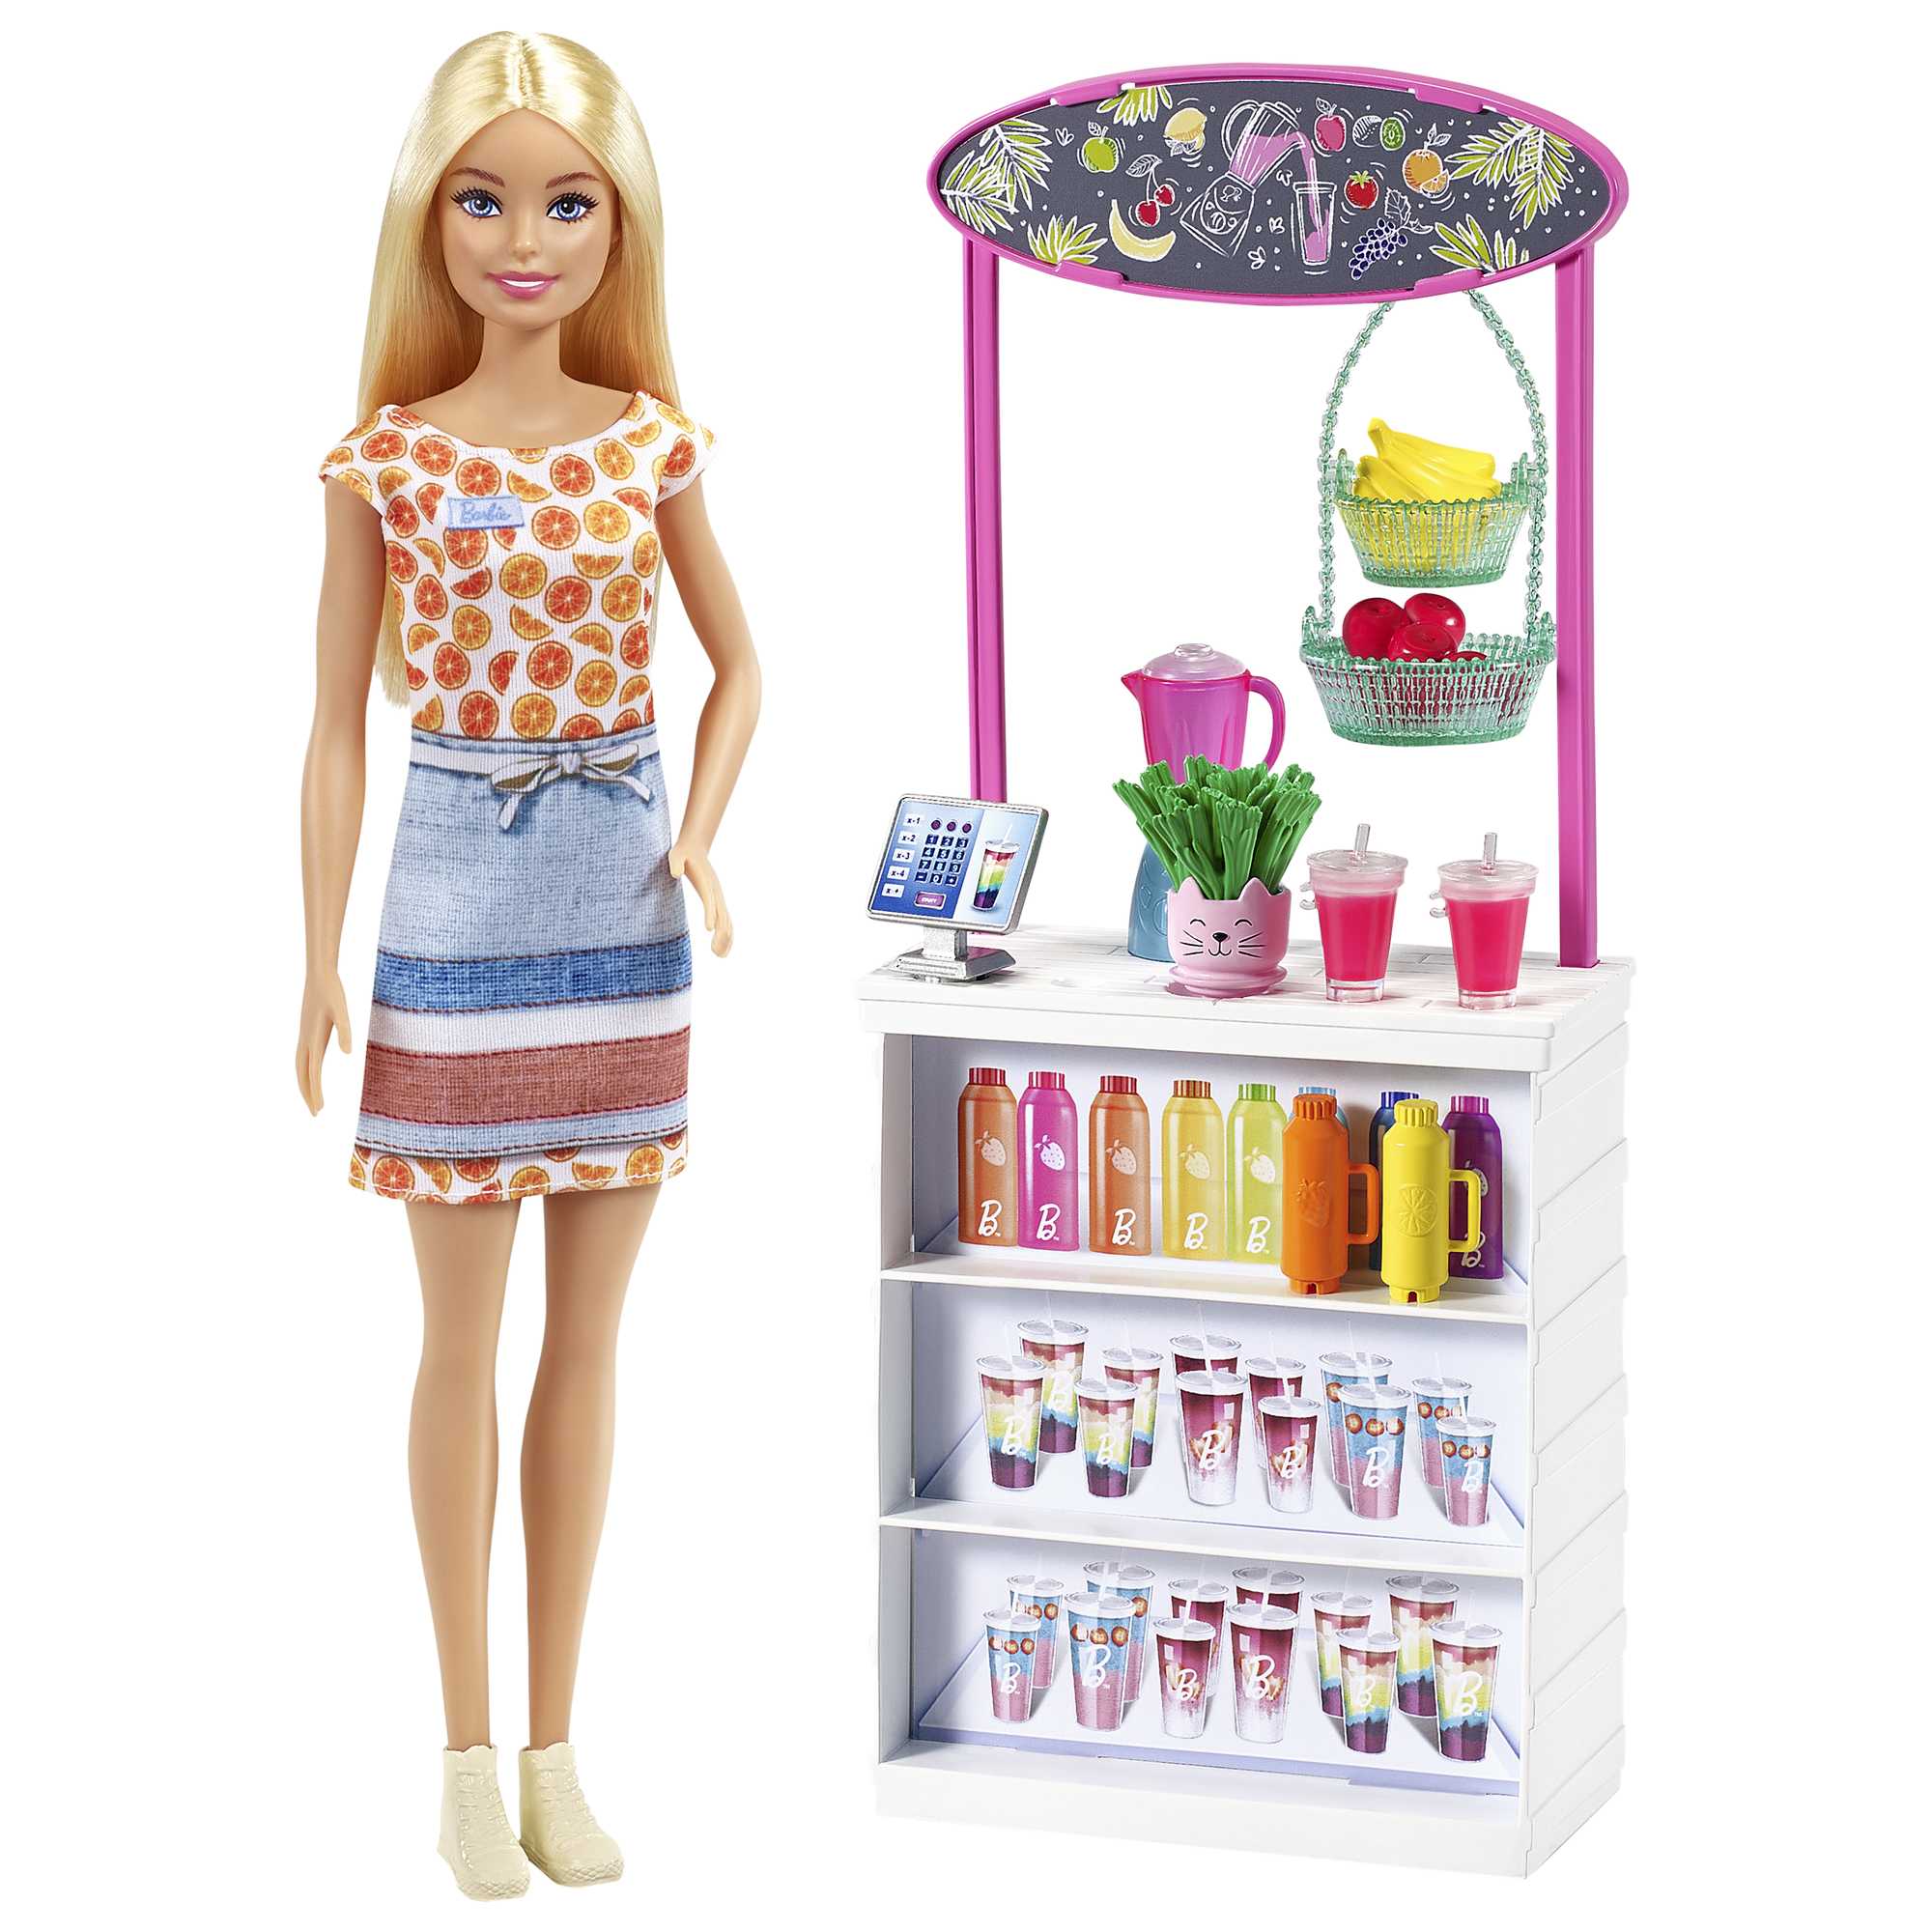 Barbie Smoothie Bar Playset with Blonde Barbie Doll (GRN75)